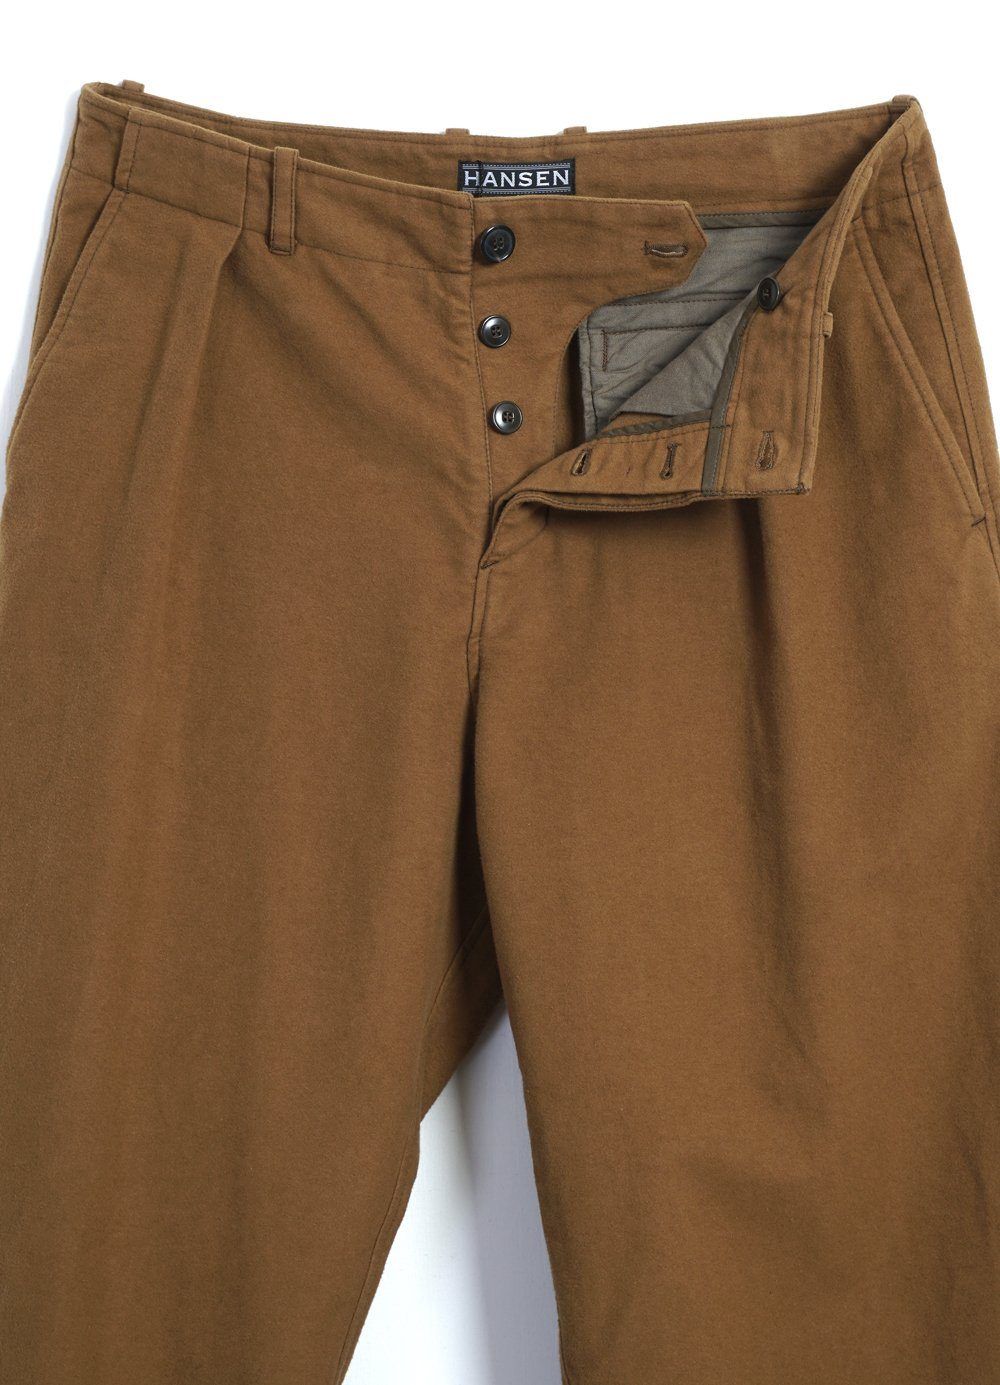 HANSEN GARMENTS - BOBBY | Super Wide Pleated Trousers | Turmeric - HANSEN Garments